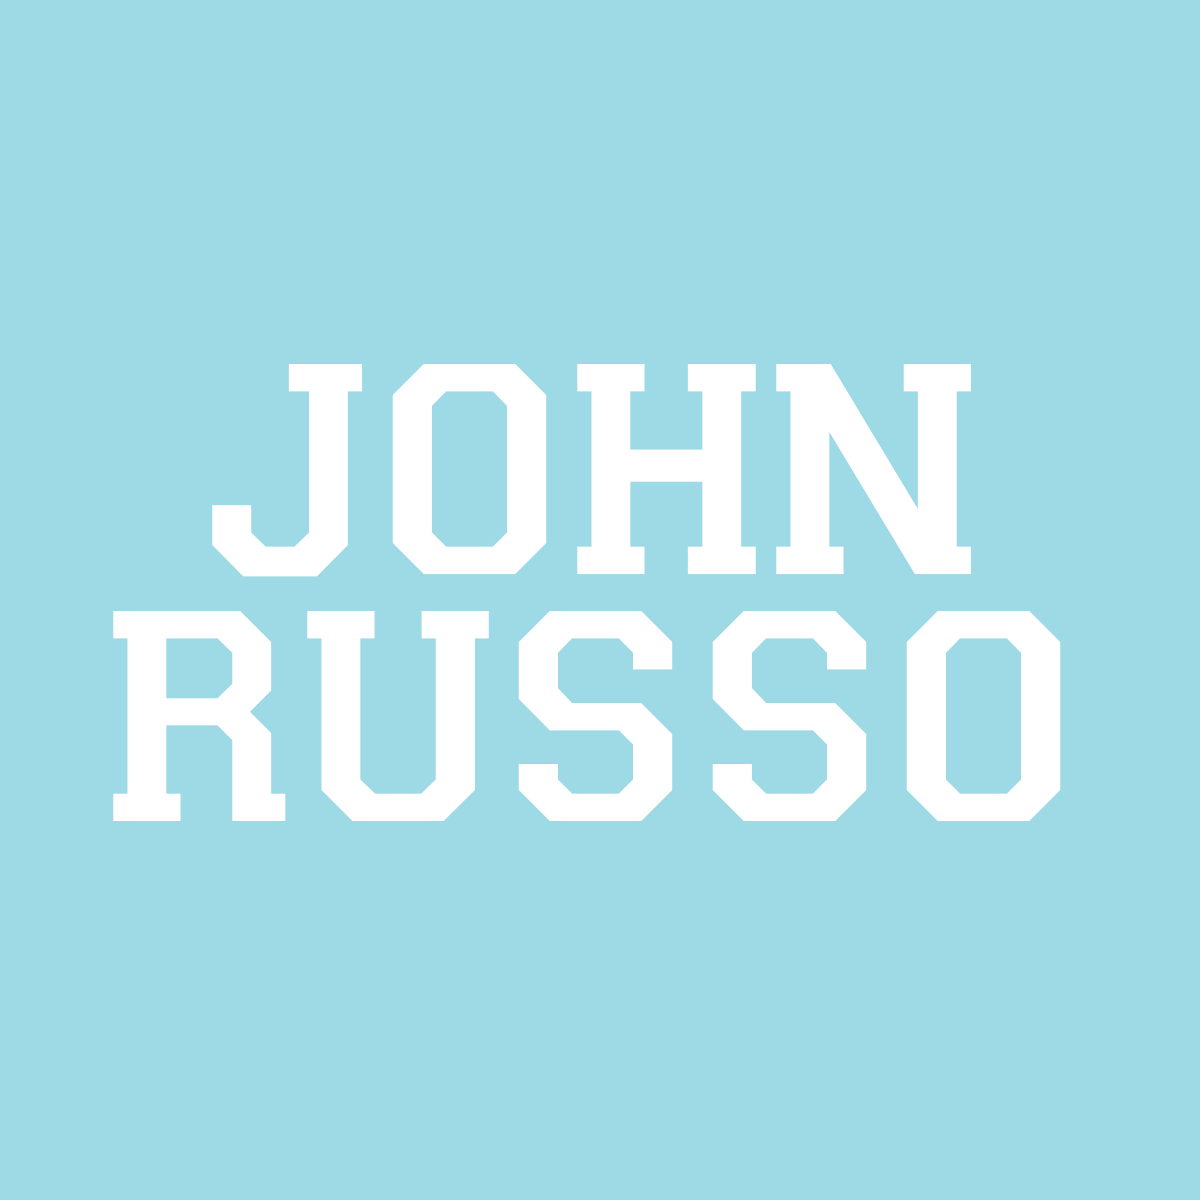 John Russo